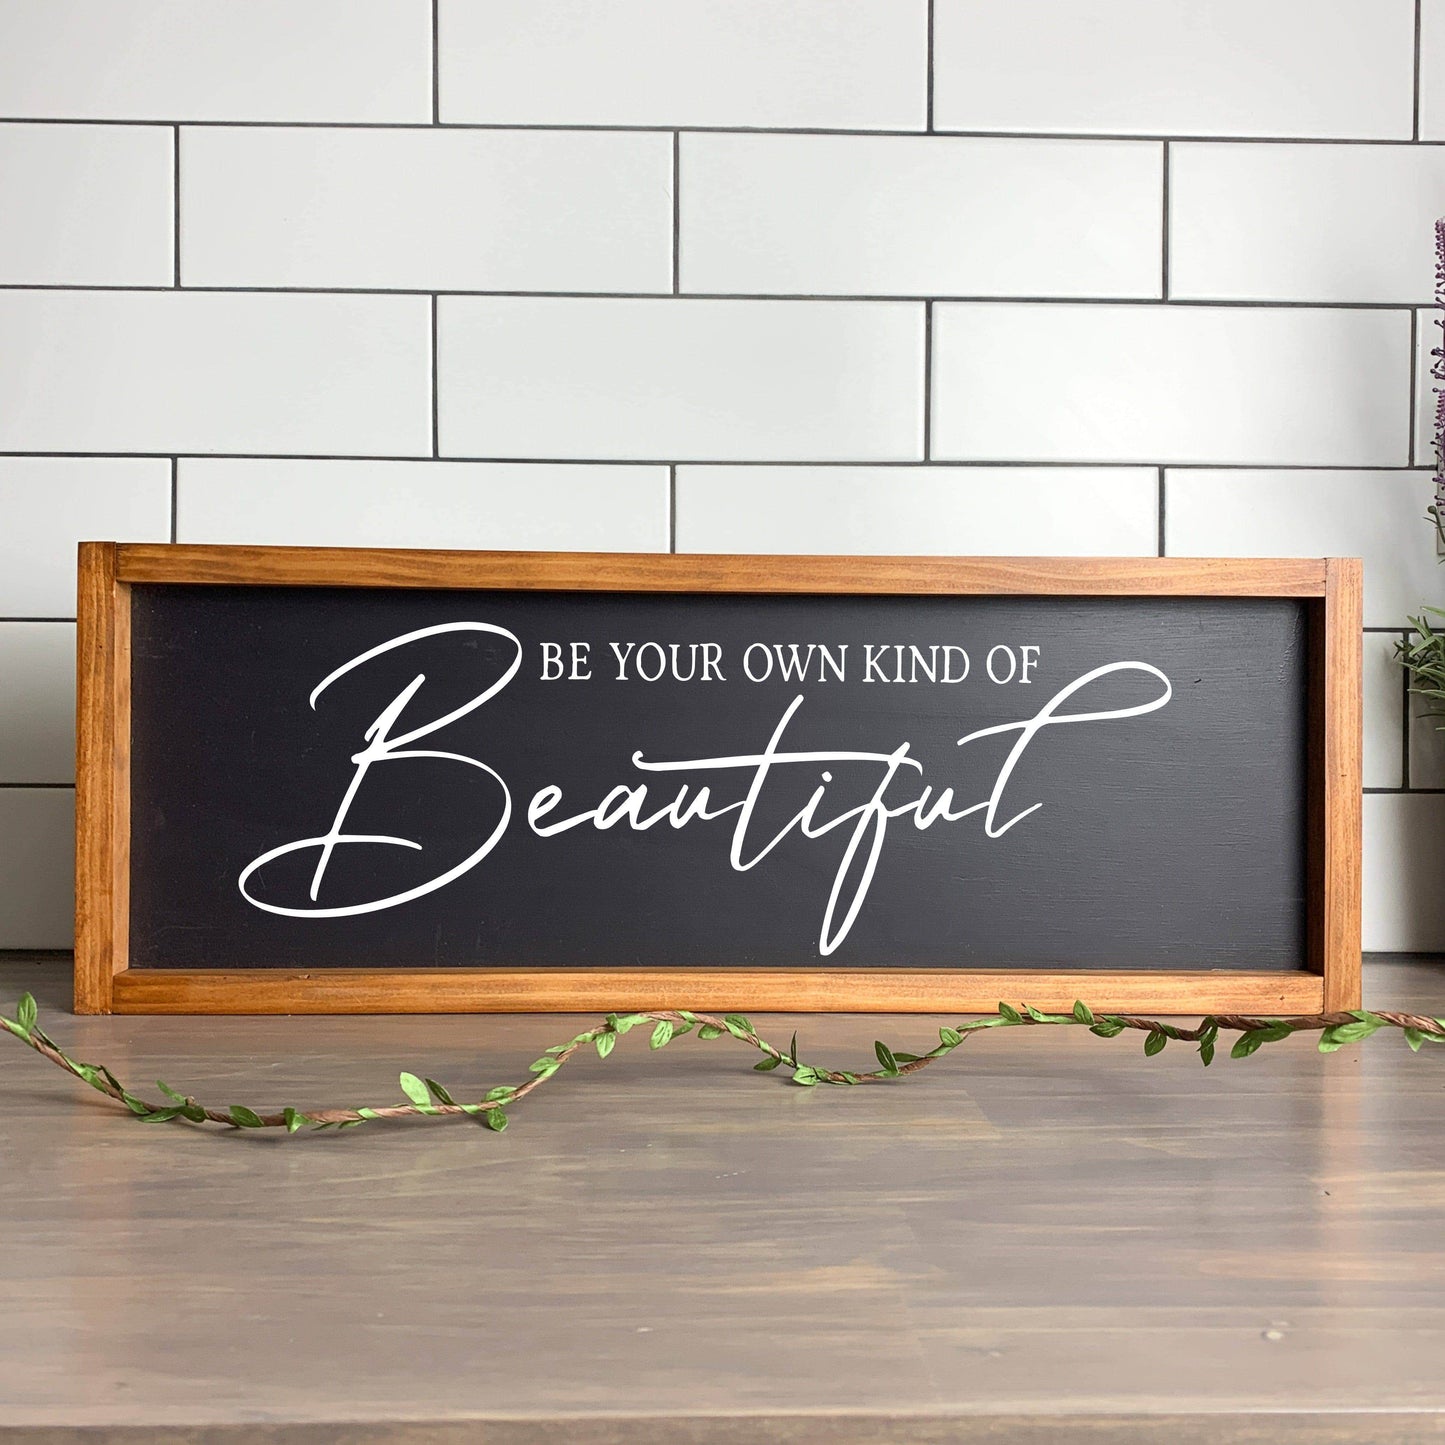 Be your Own kind of Beautiful, framed bathroom wood sign, bathroom decor, home decor